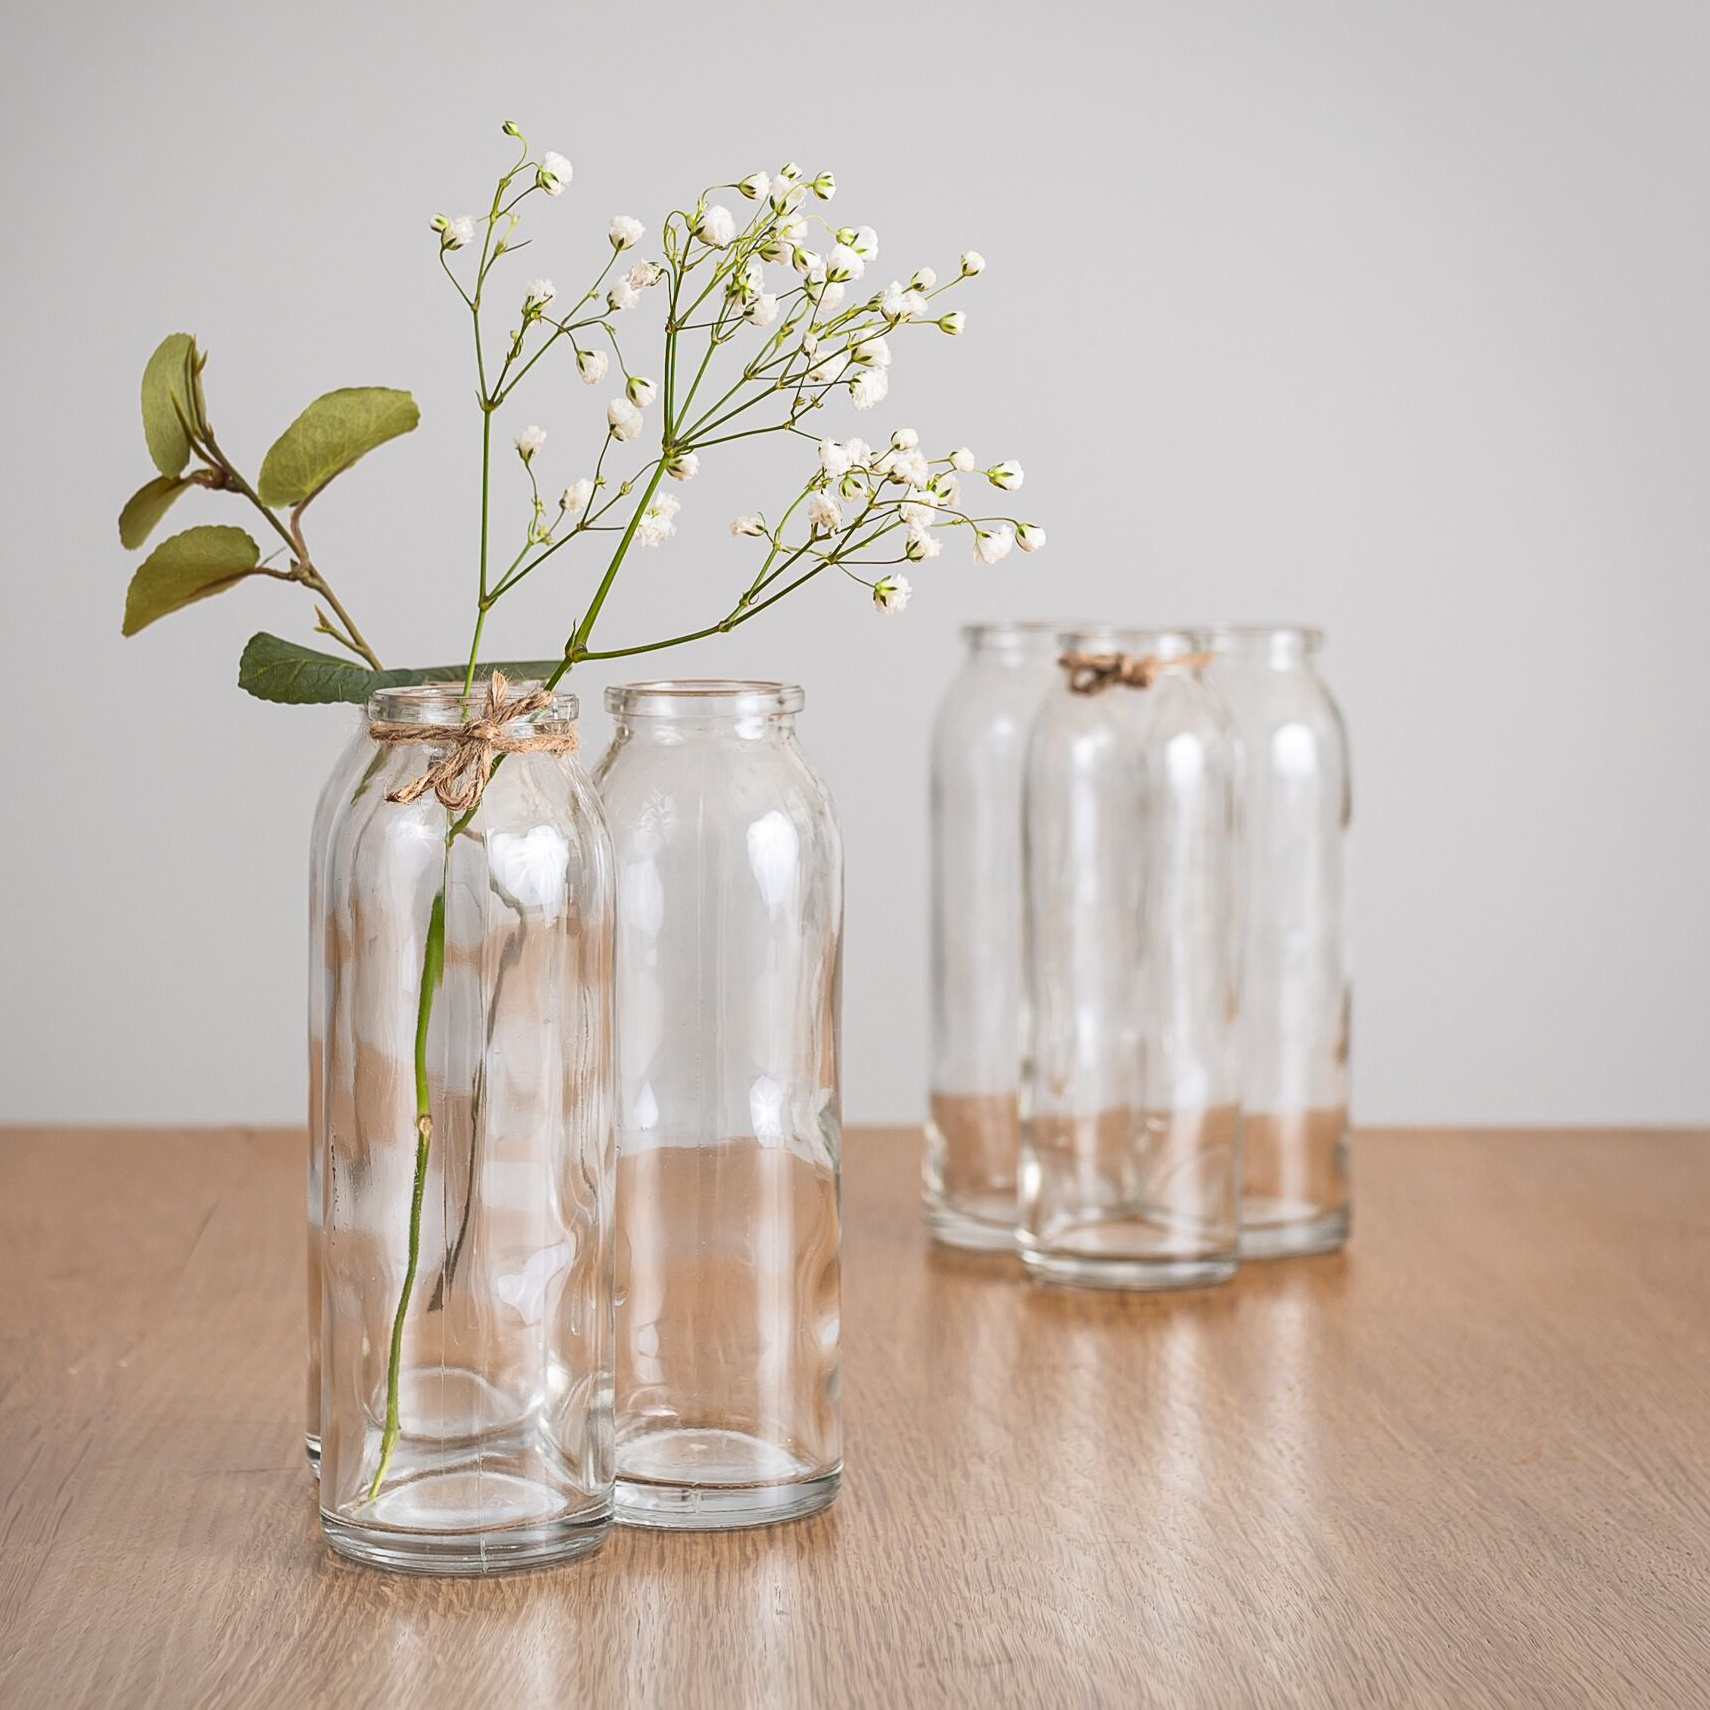 The Flower Studio Set Of 2 Mini School Milk Bottles Vases In Vintage Style Metal Crate ~ Ideal for Home /& Office